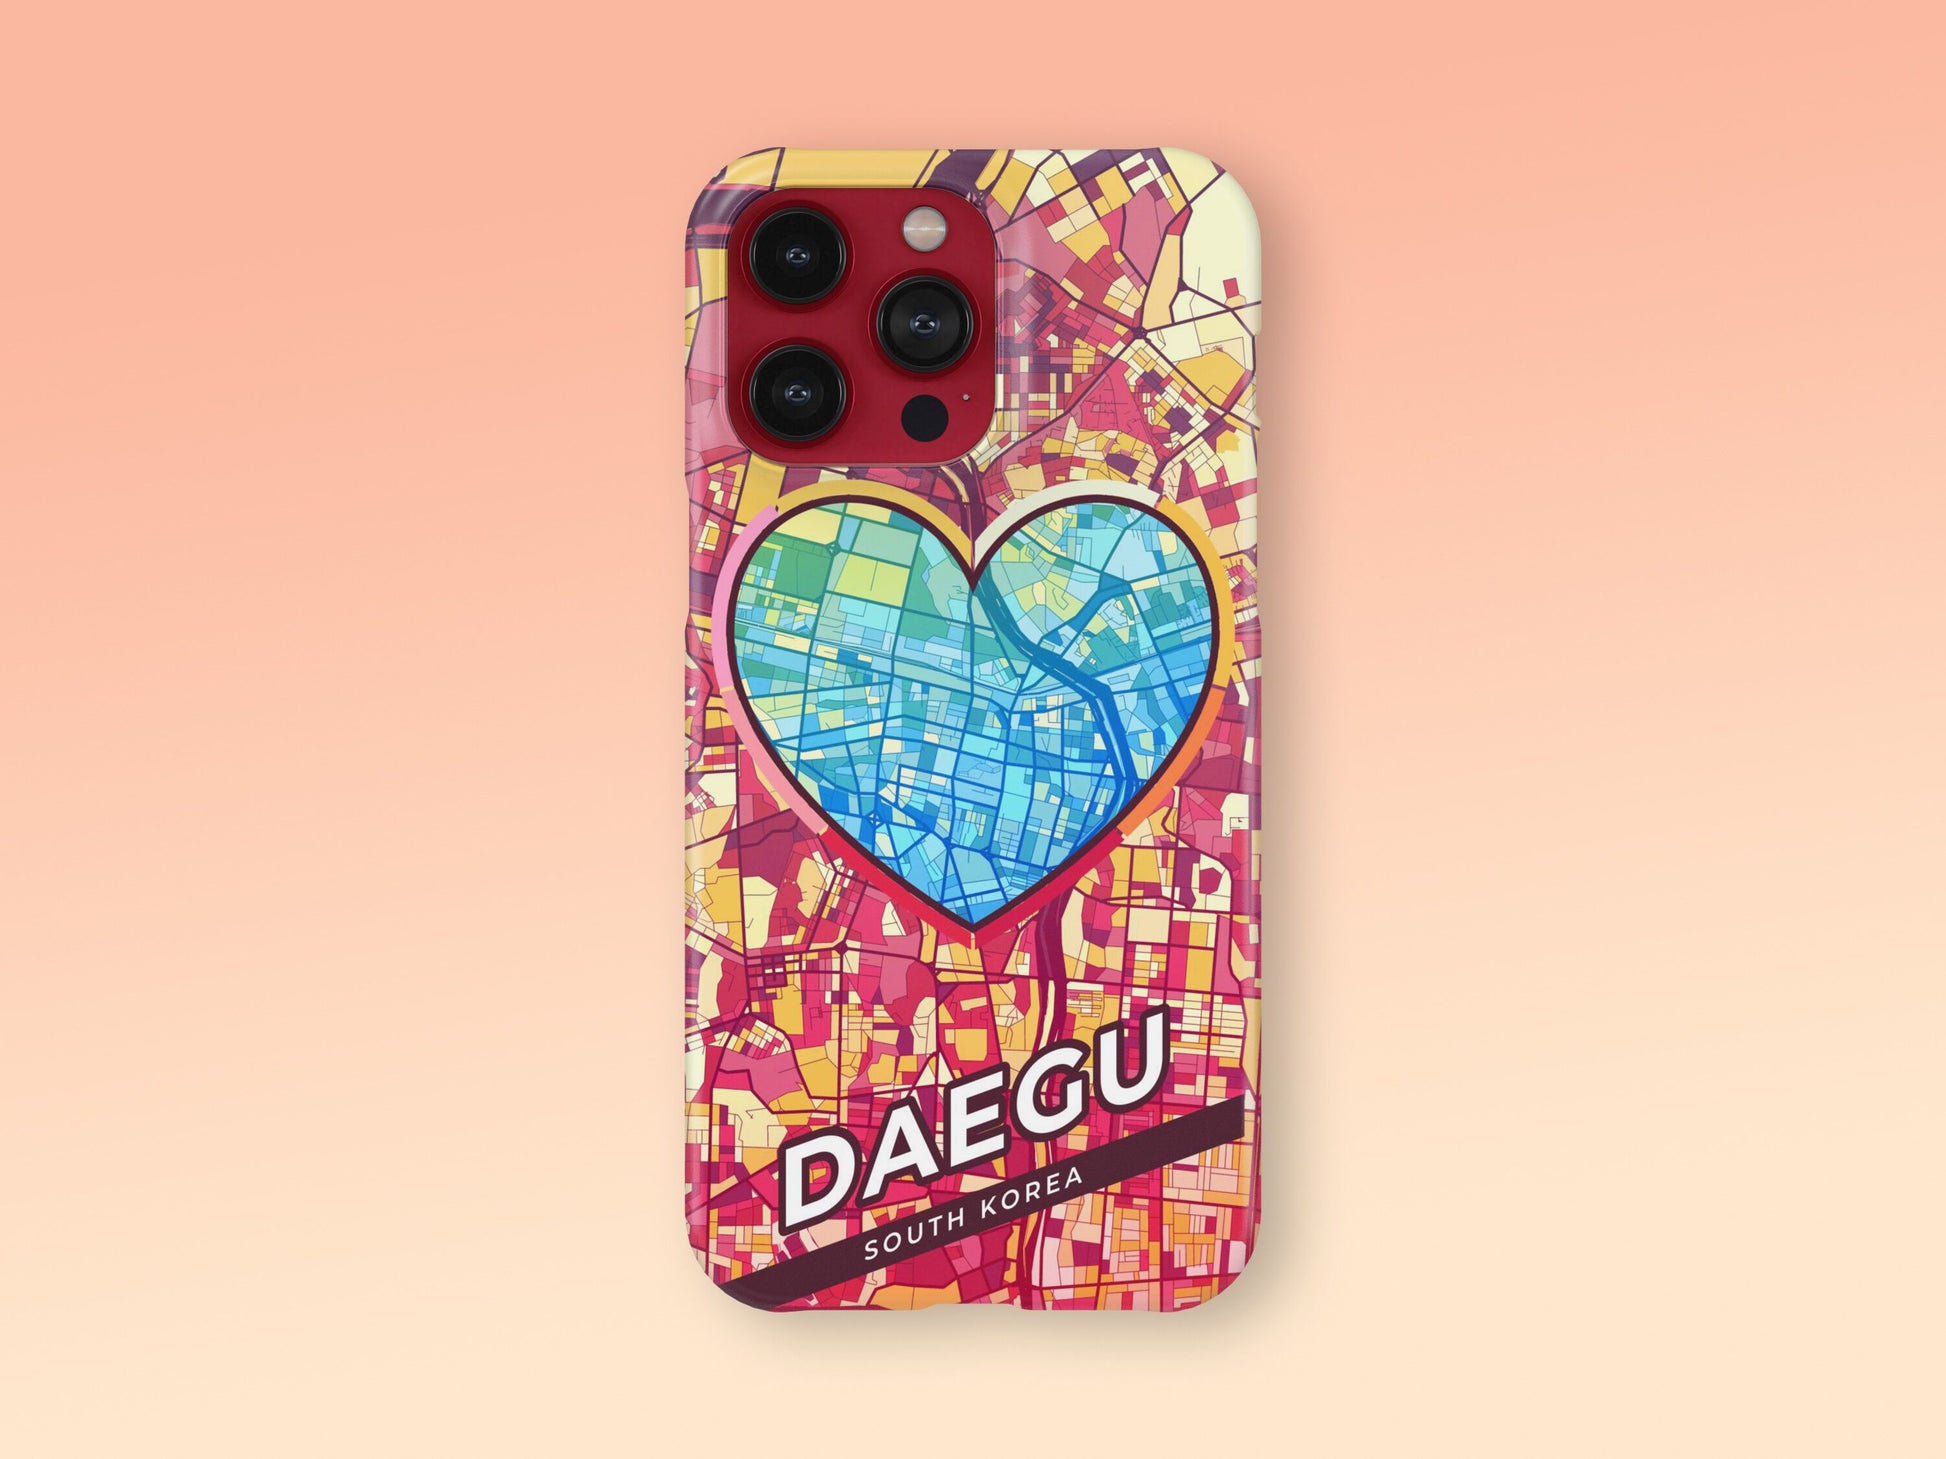 Daegu South Korea slim phone case with colorful icon. Birthday, wedding or housewarming gift. Couple match cases. 2